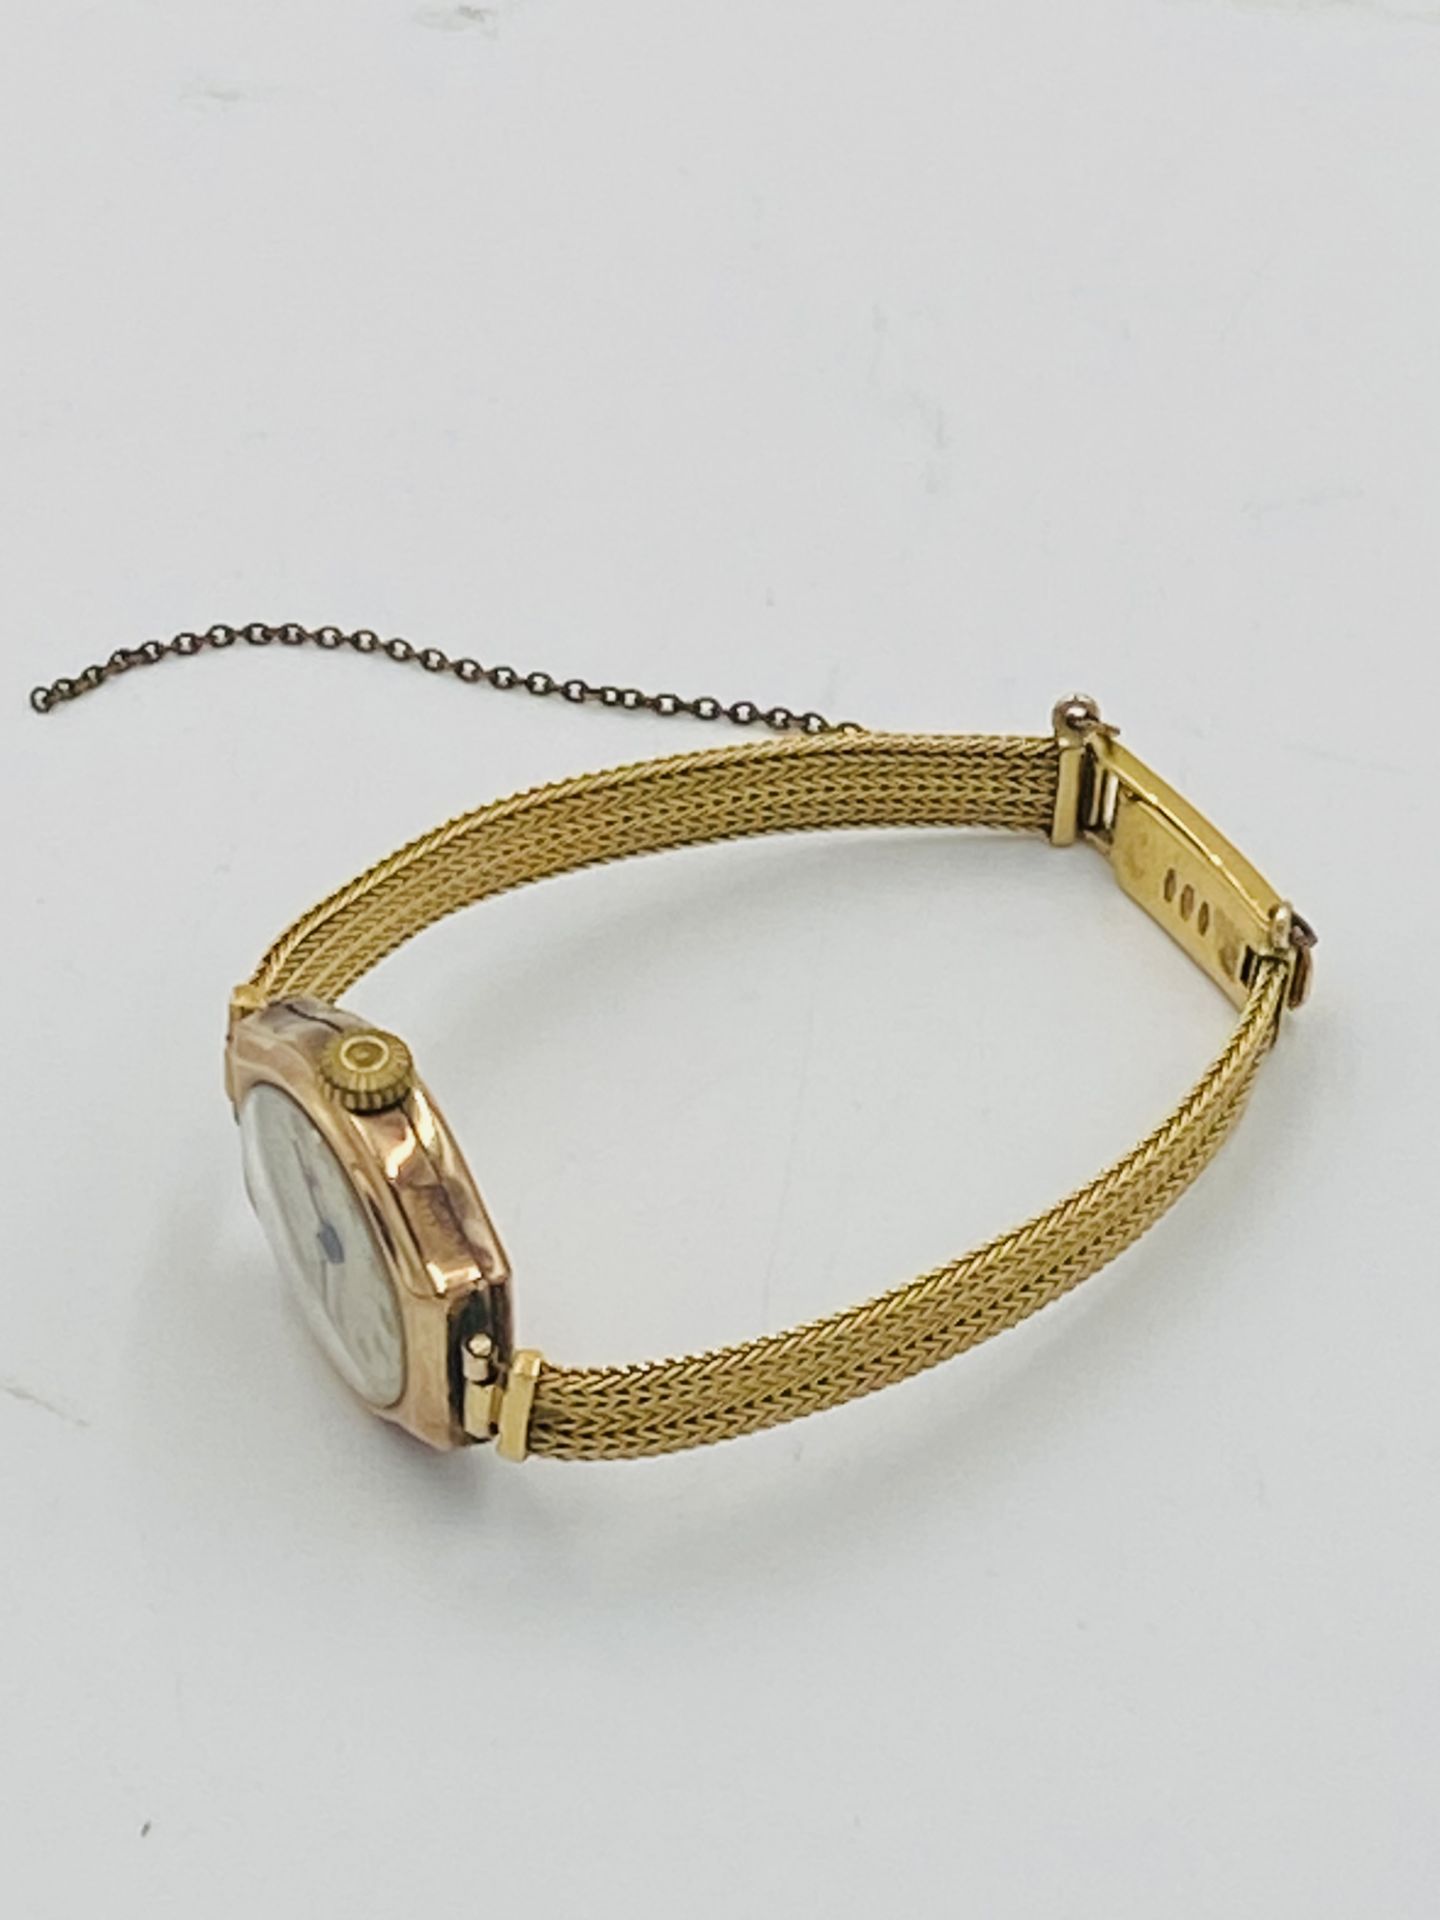 Ladies wristwatch on 18ct gold strap - Image 6 of 6